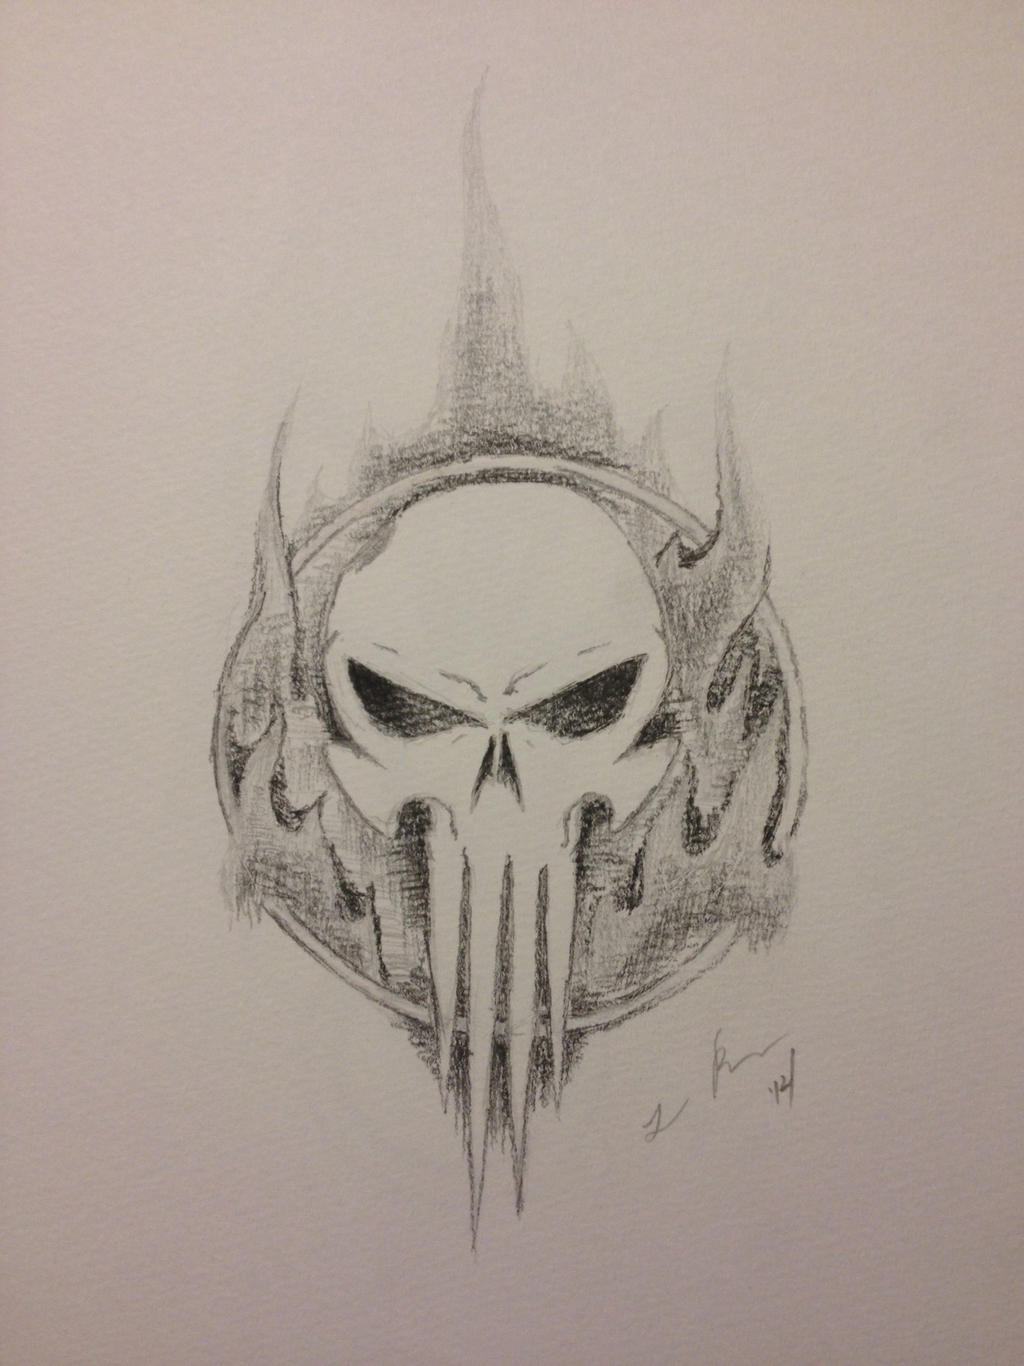 Punisher Skull tattoo design by Ceanoa on DeviantArt